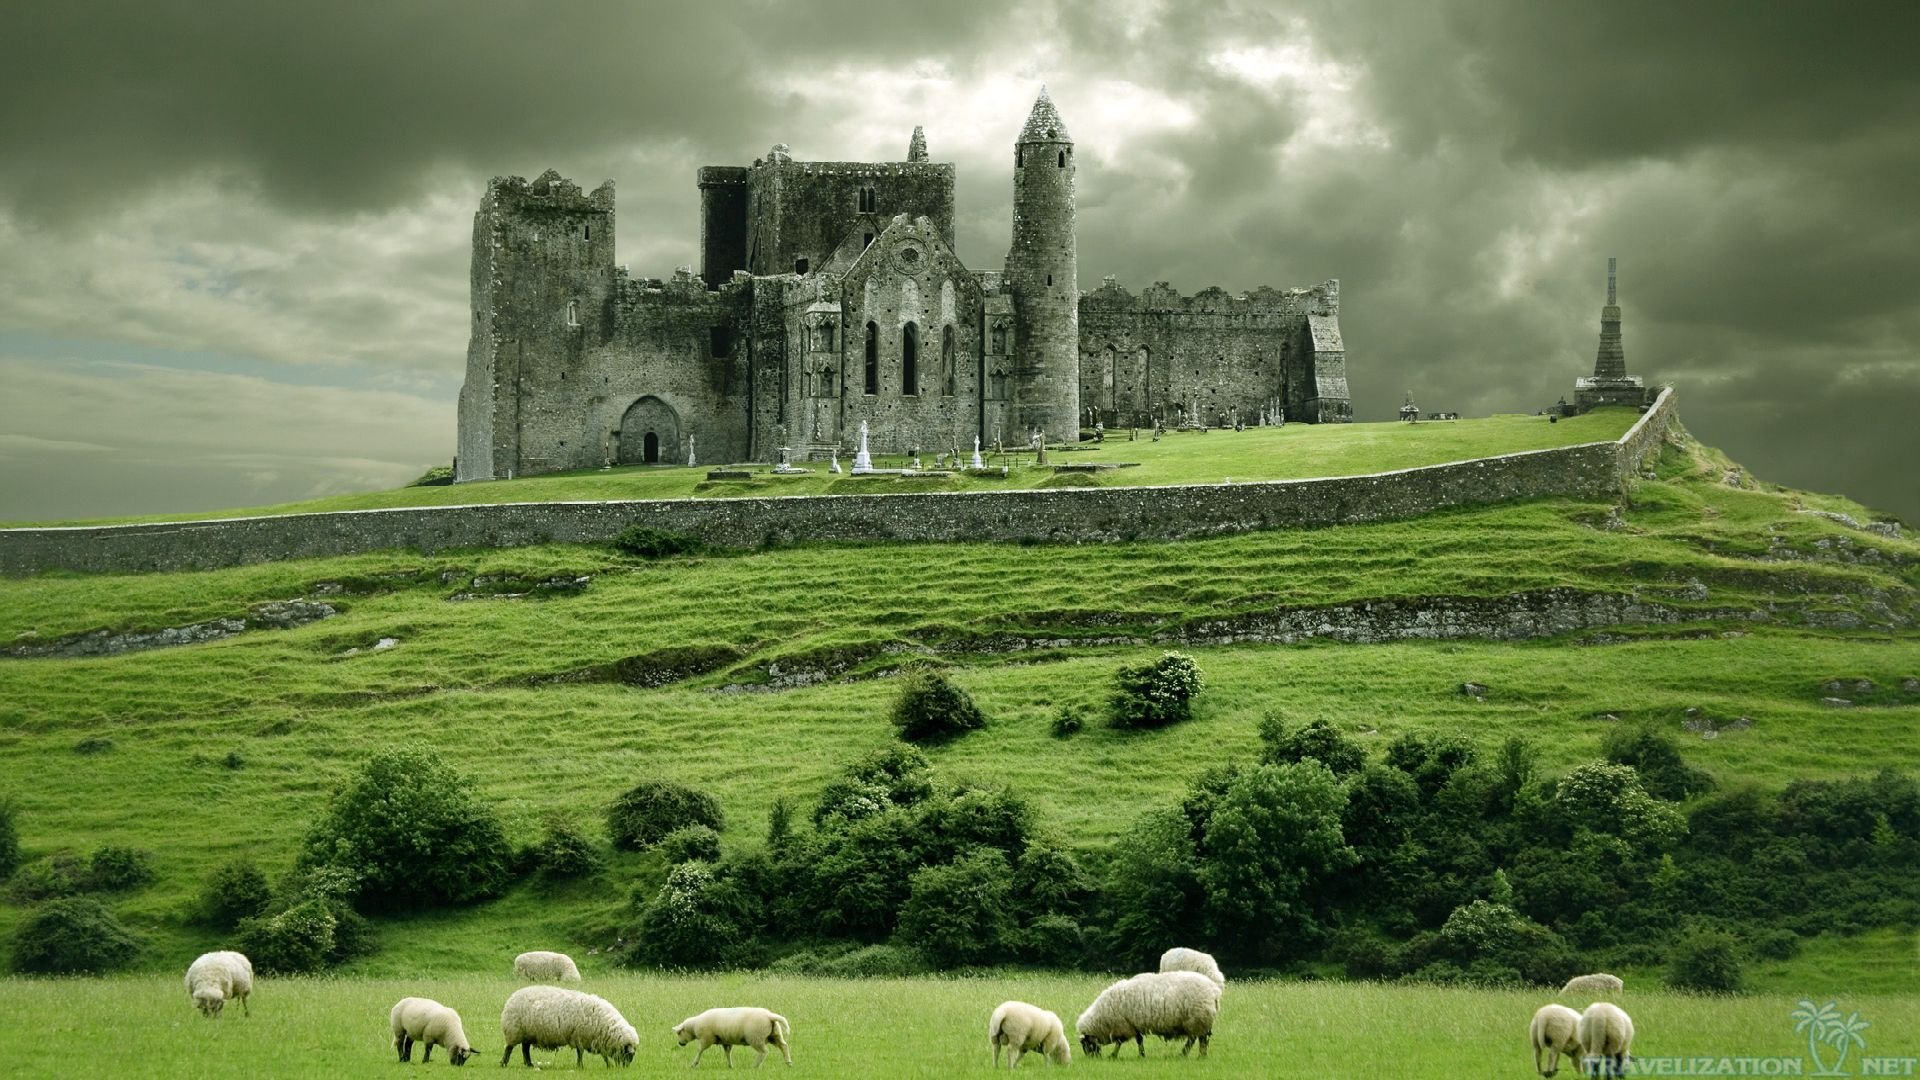 Hannah McDonald goes to Ireland - Castles and sheep Google image from http://hannahgoestoireland.files.wordpress.com/2013/01/cloudy-ireland-landscapes-of-the-world-wallpapers-1920x1080.jpeg